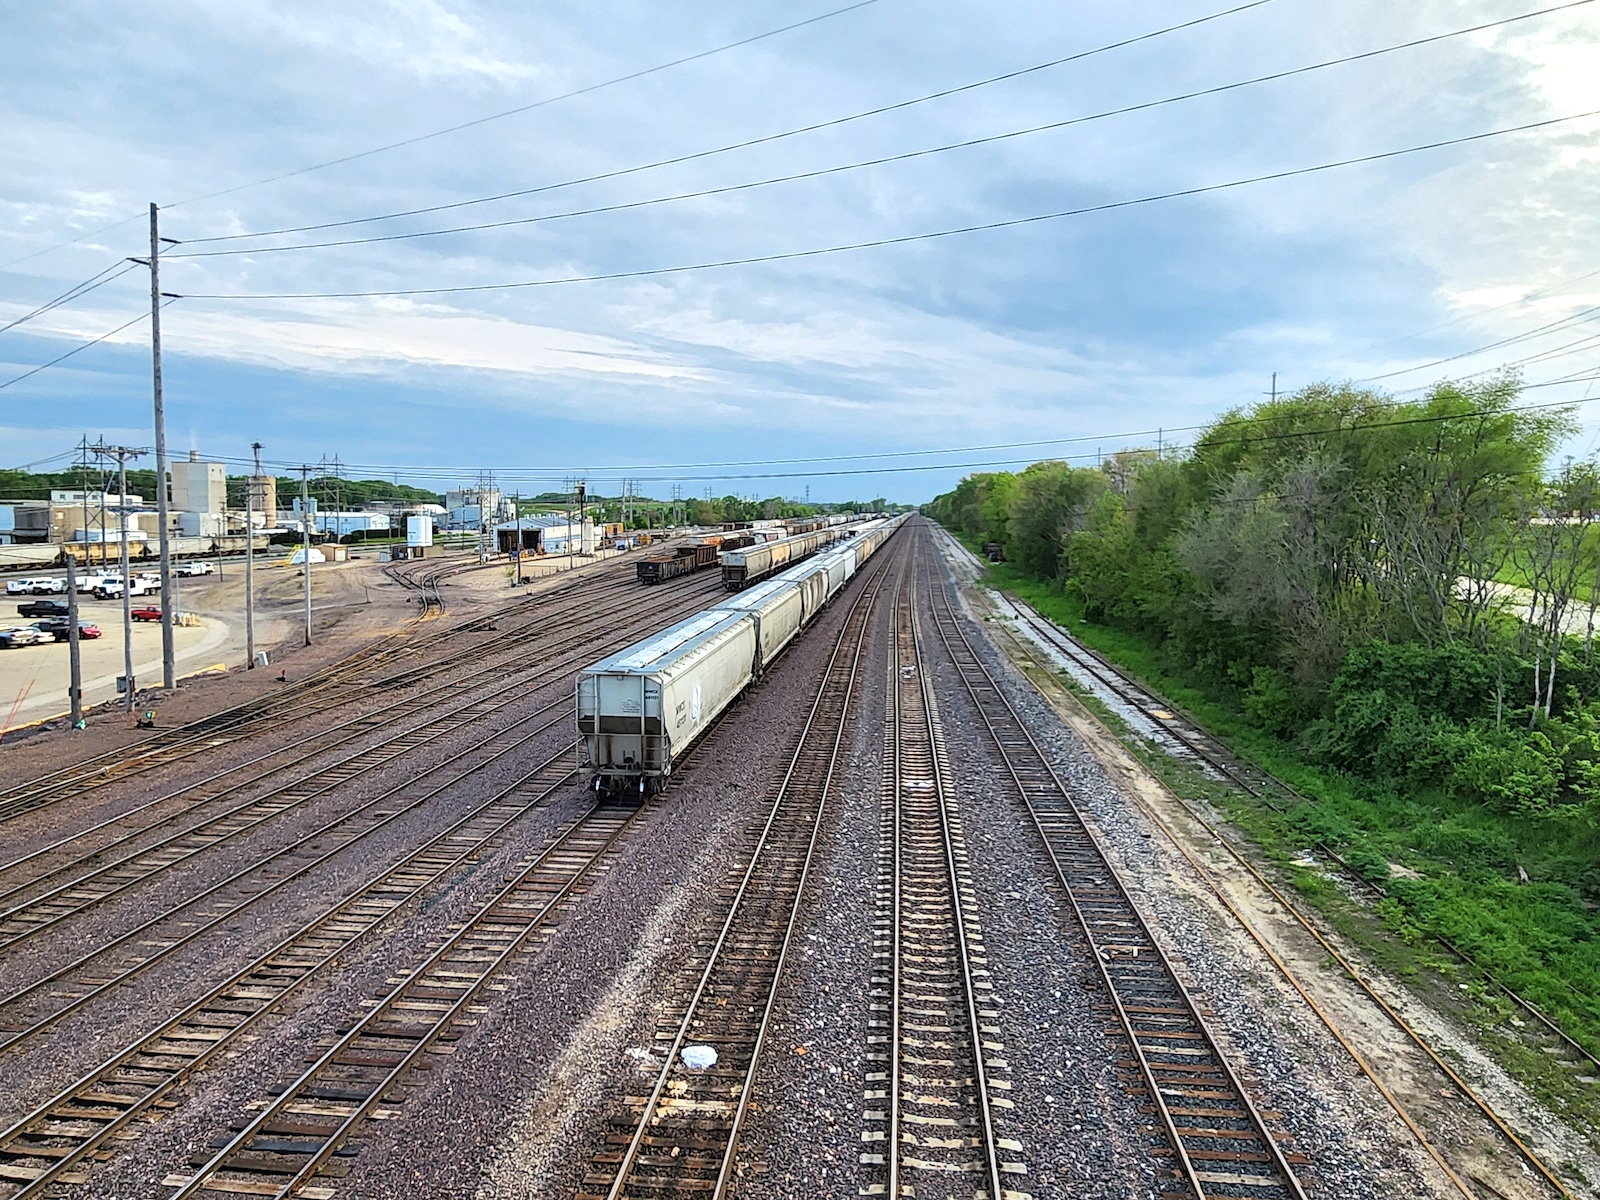 A train runs along a mult-track section of railroad